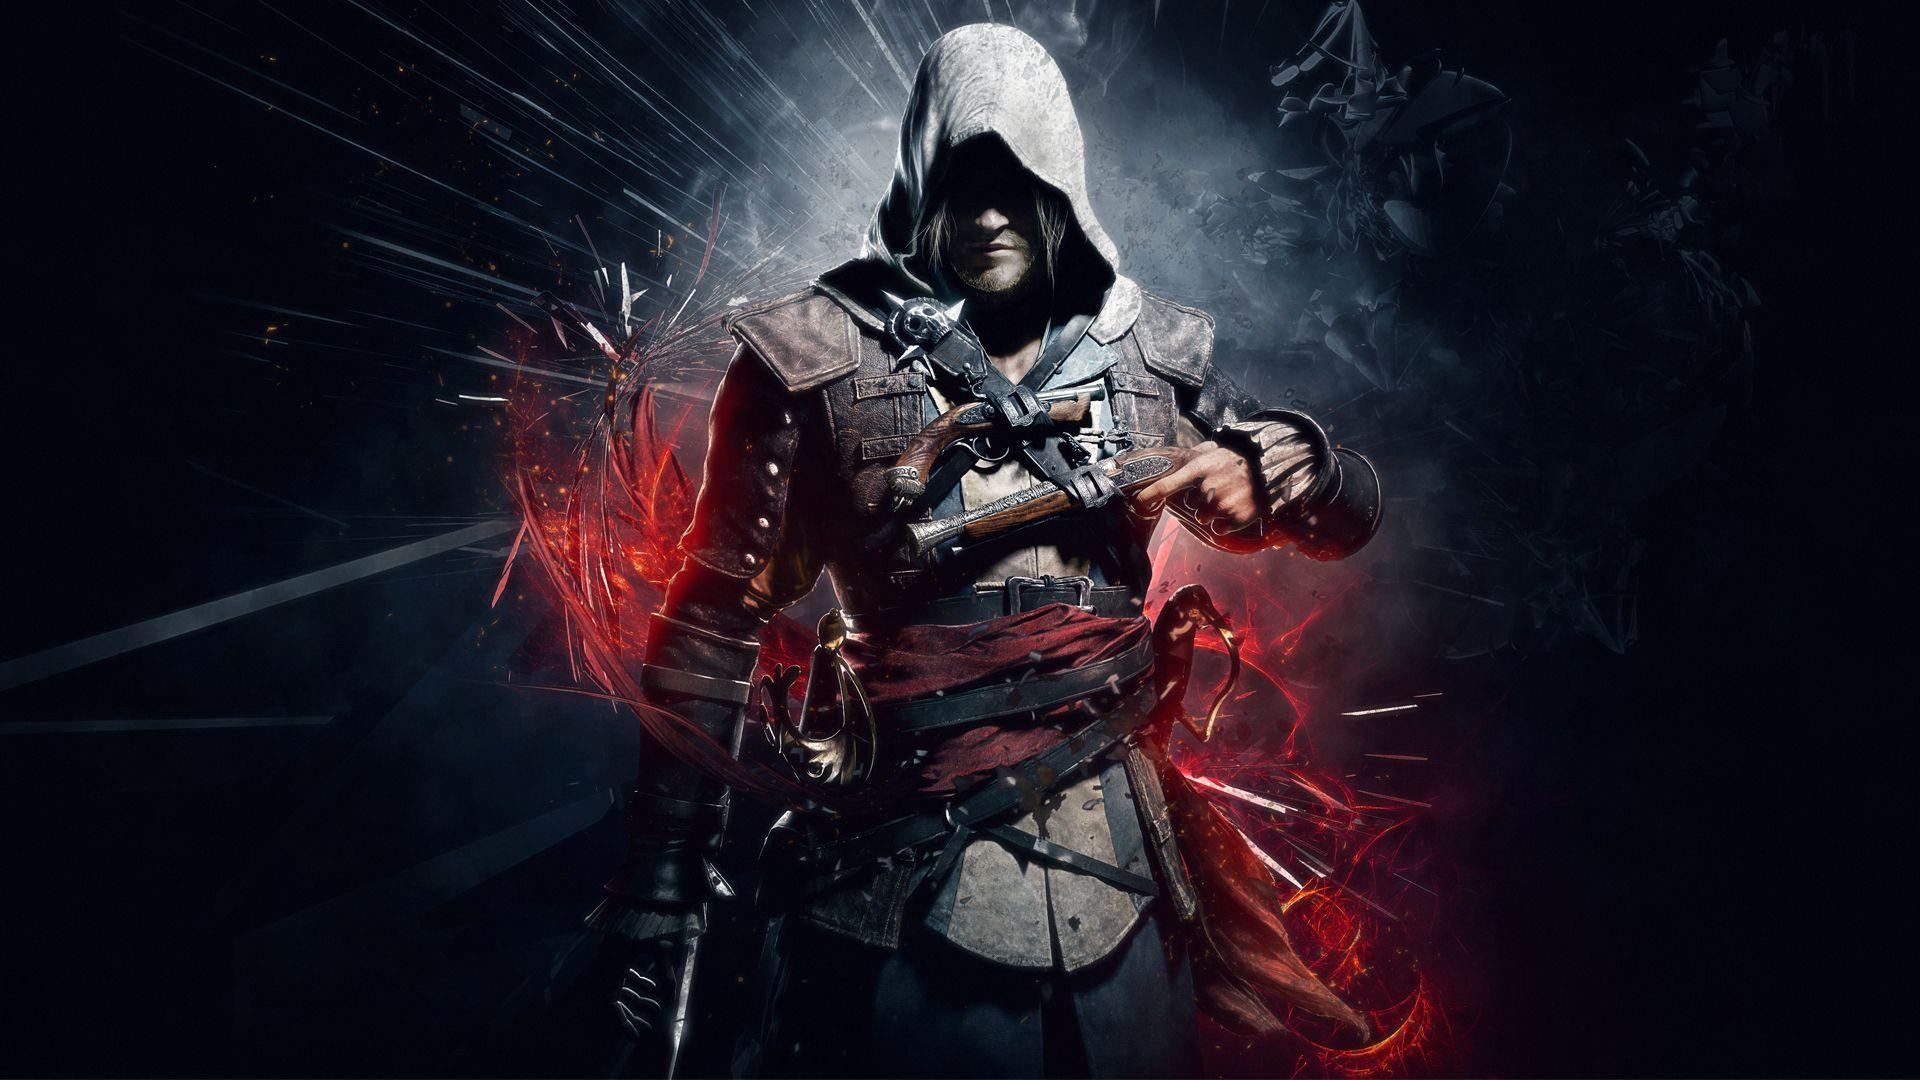 Wallpaper # wallpaper from Assassin's Creed IV: Black Flag